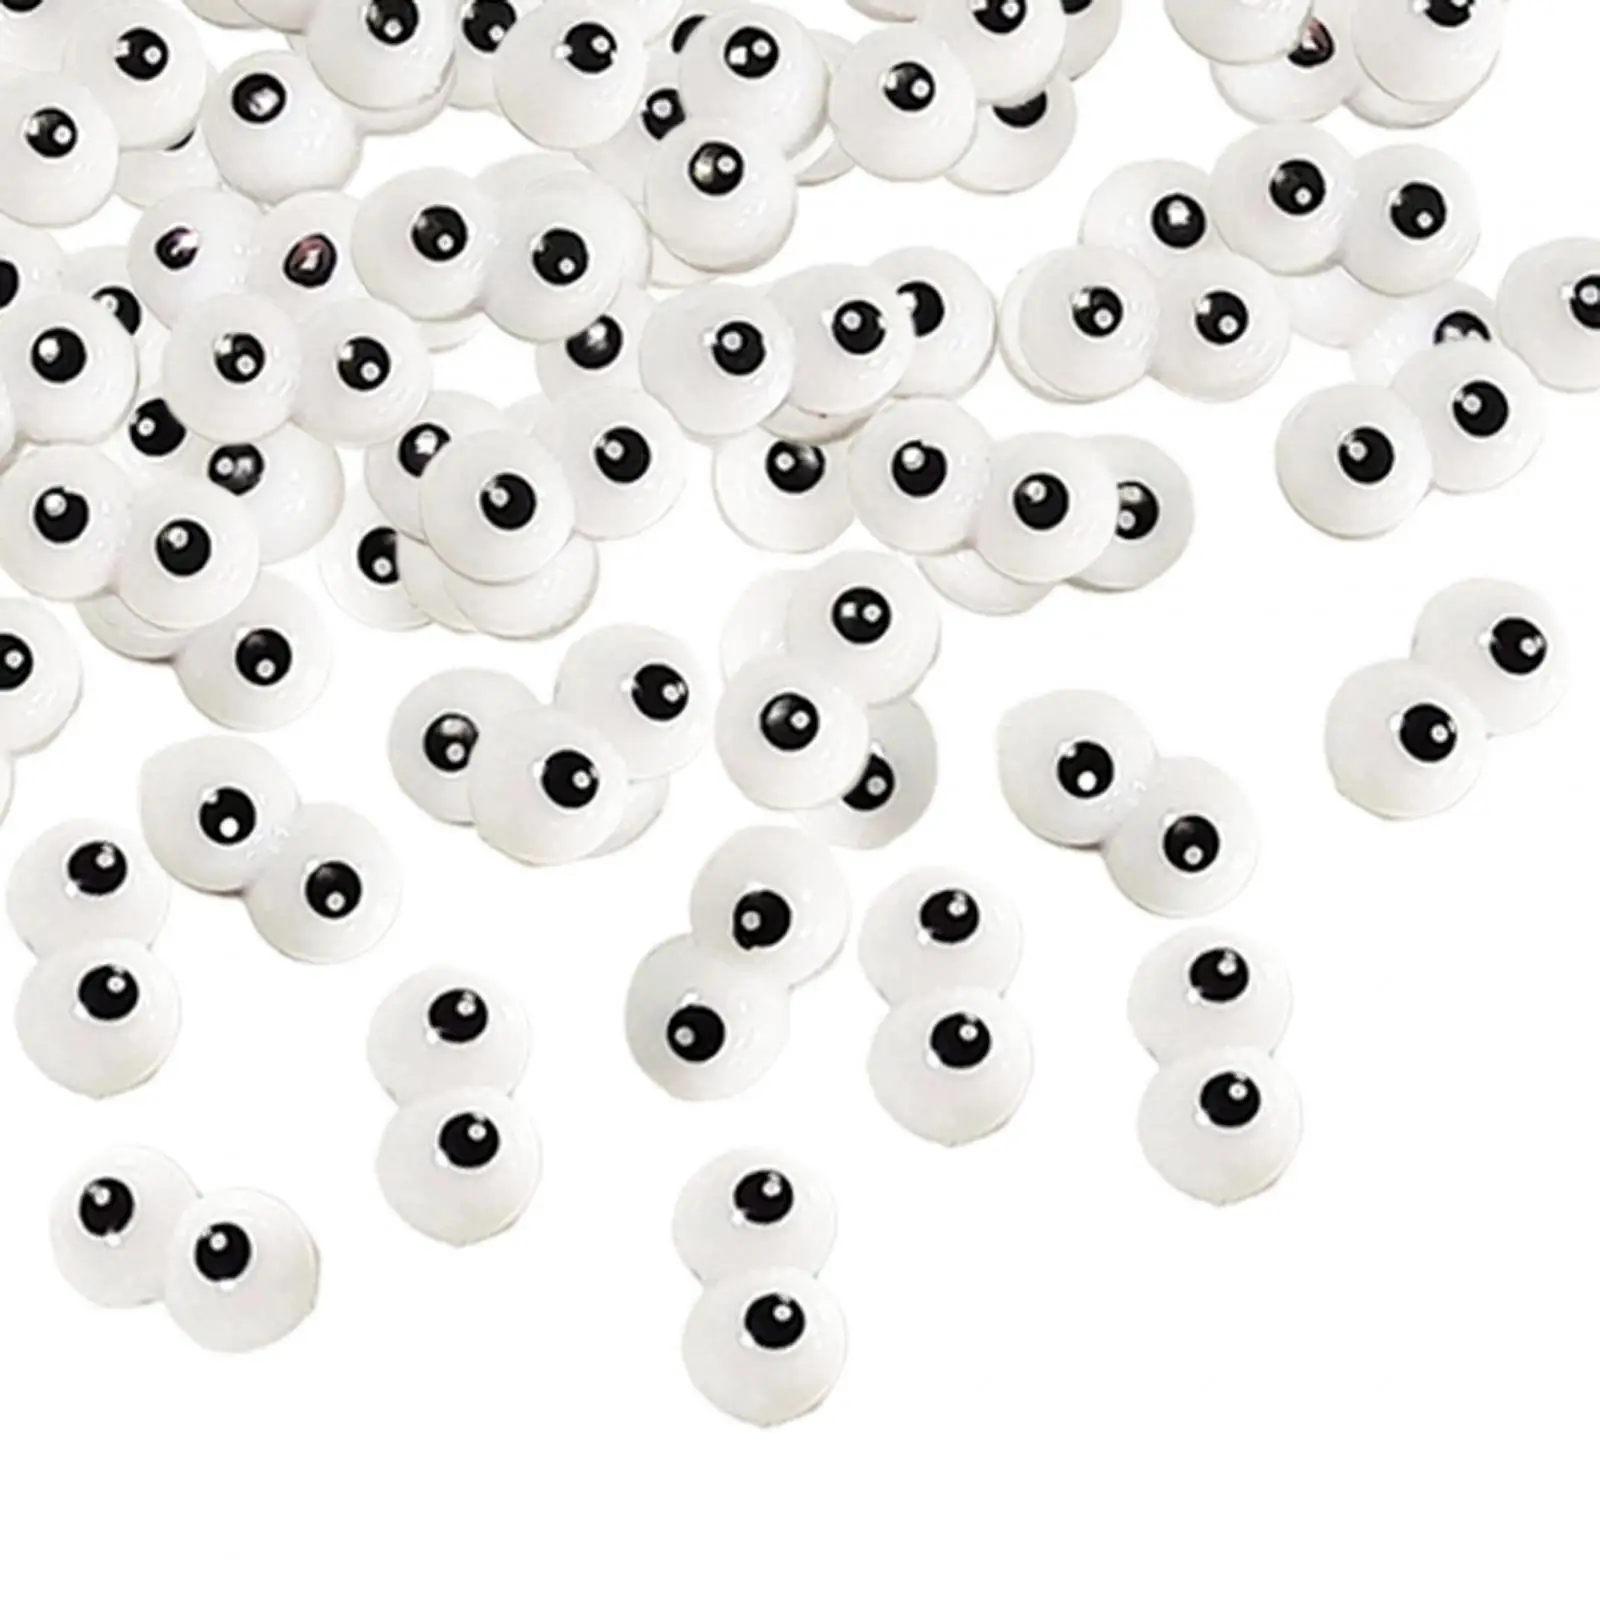 100x Siamese Eye Accessories Eye Stickers Plush Doll Accessory Safety Eyes